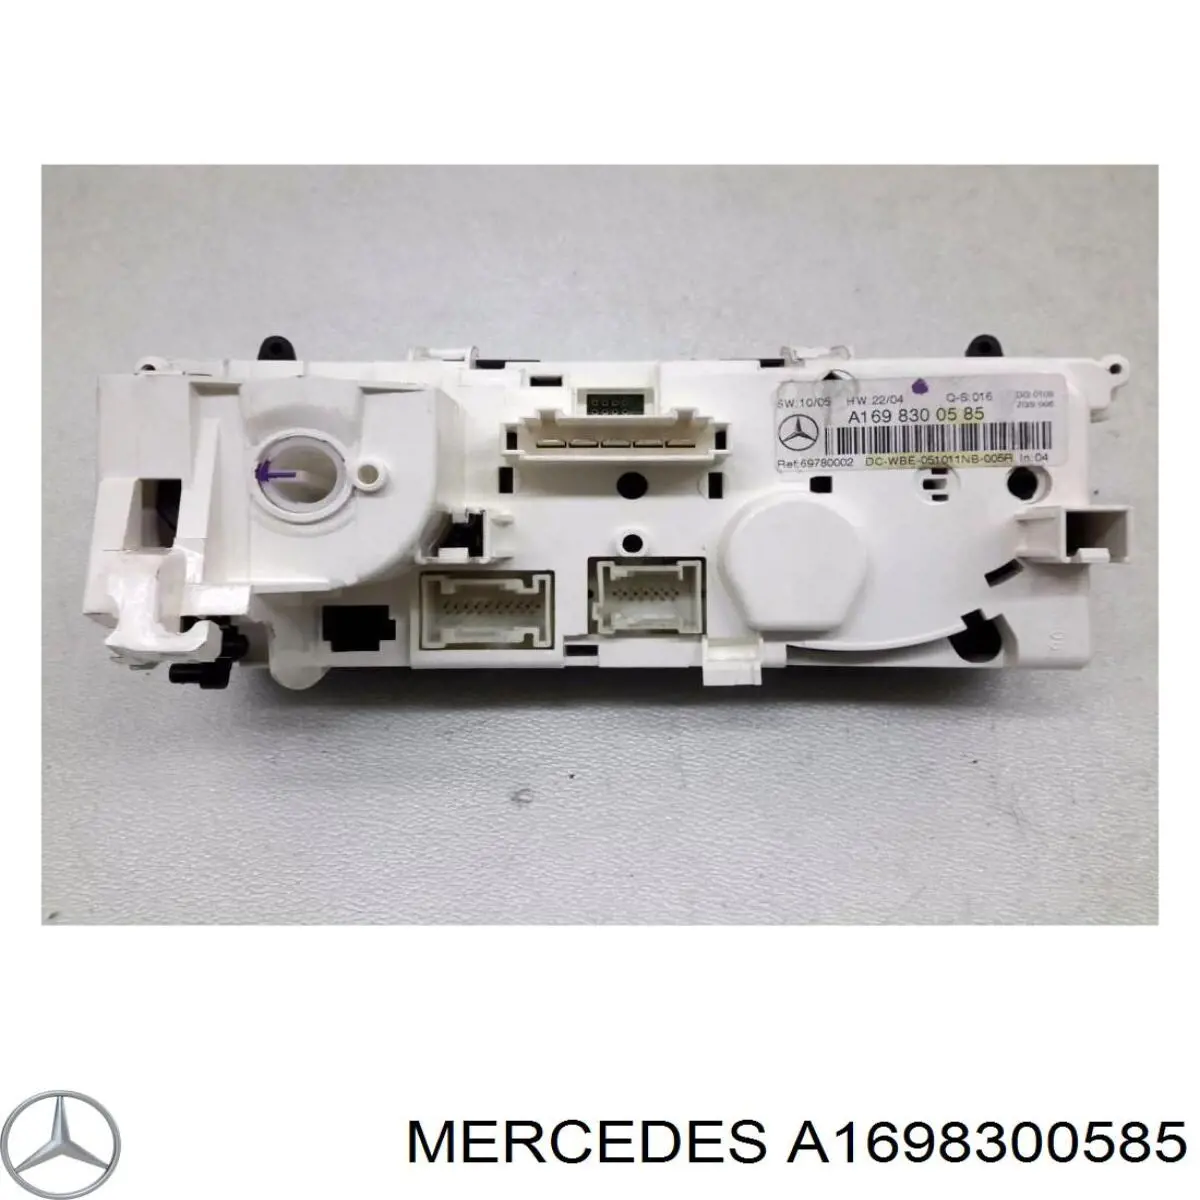 A1698302285 Mercedes unidade de controlo dos modos de aquecimento/condicionamento